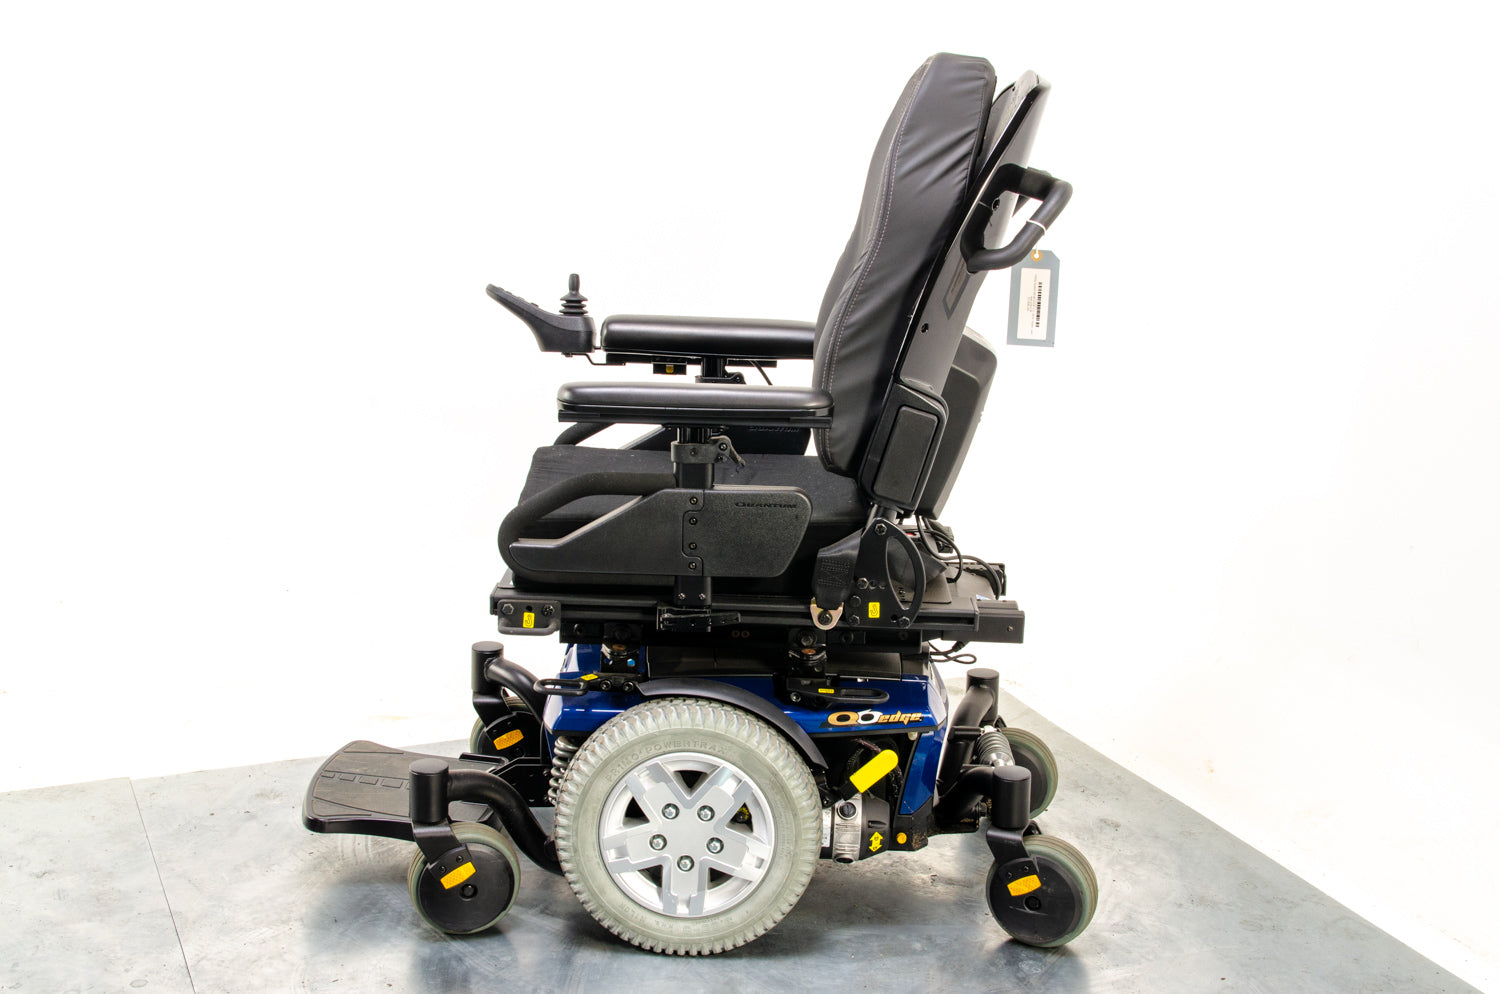 Pride Quantum Q6 Edge Used Electric Wheelchair Powerchair Power Tilt 6mph Blue